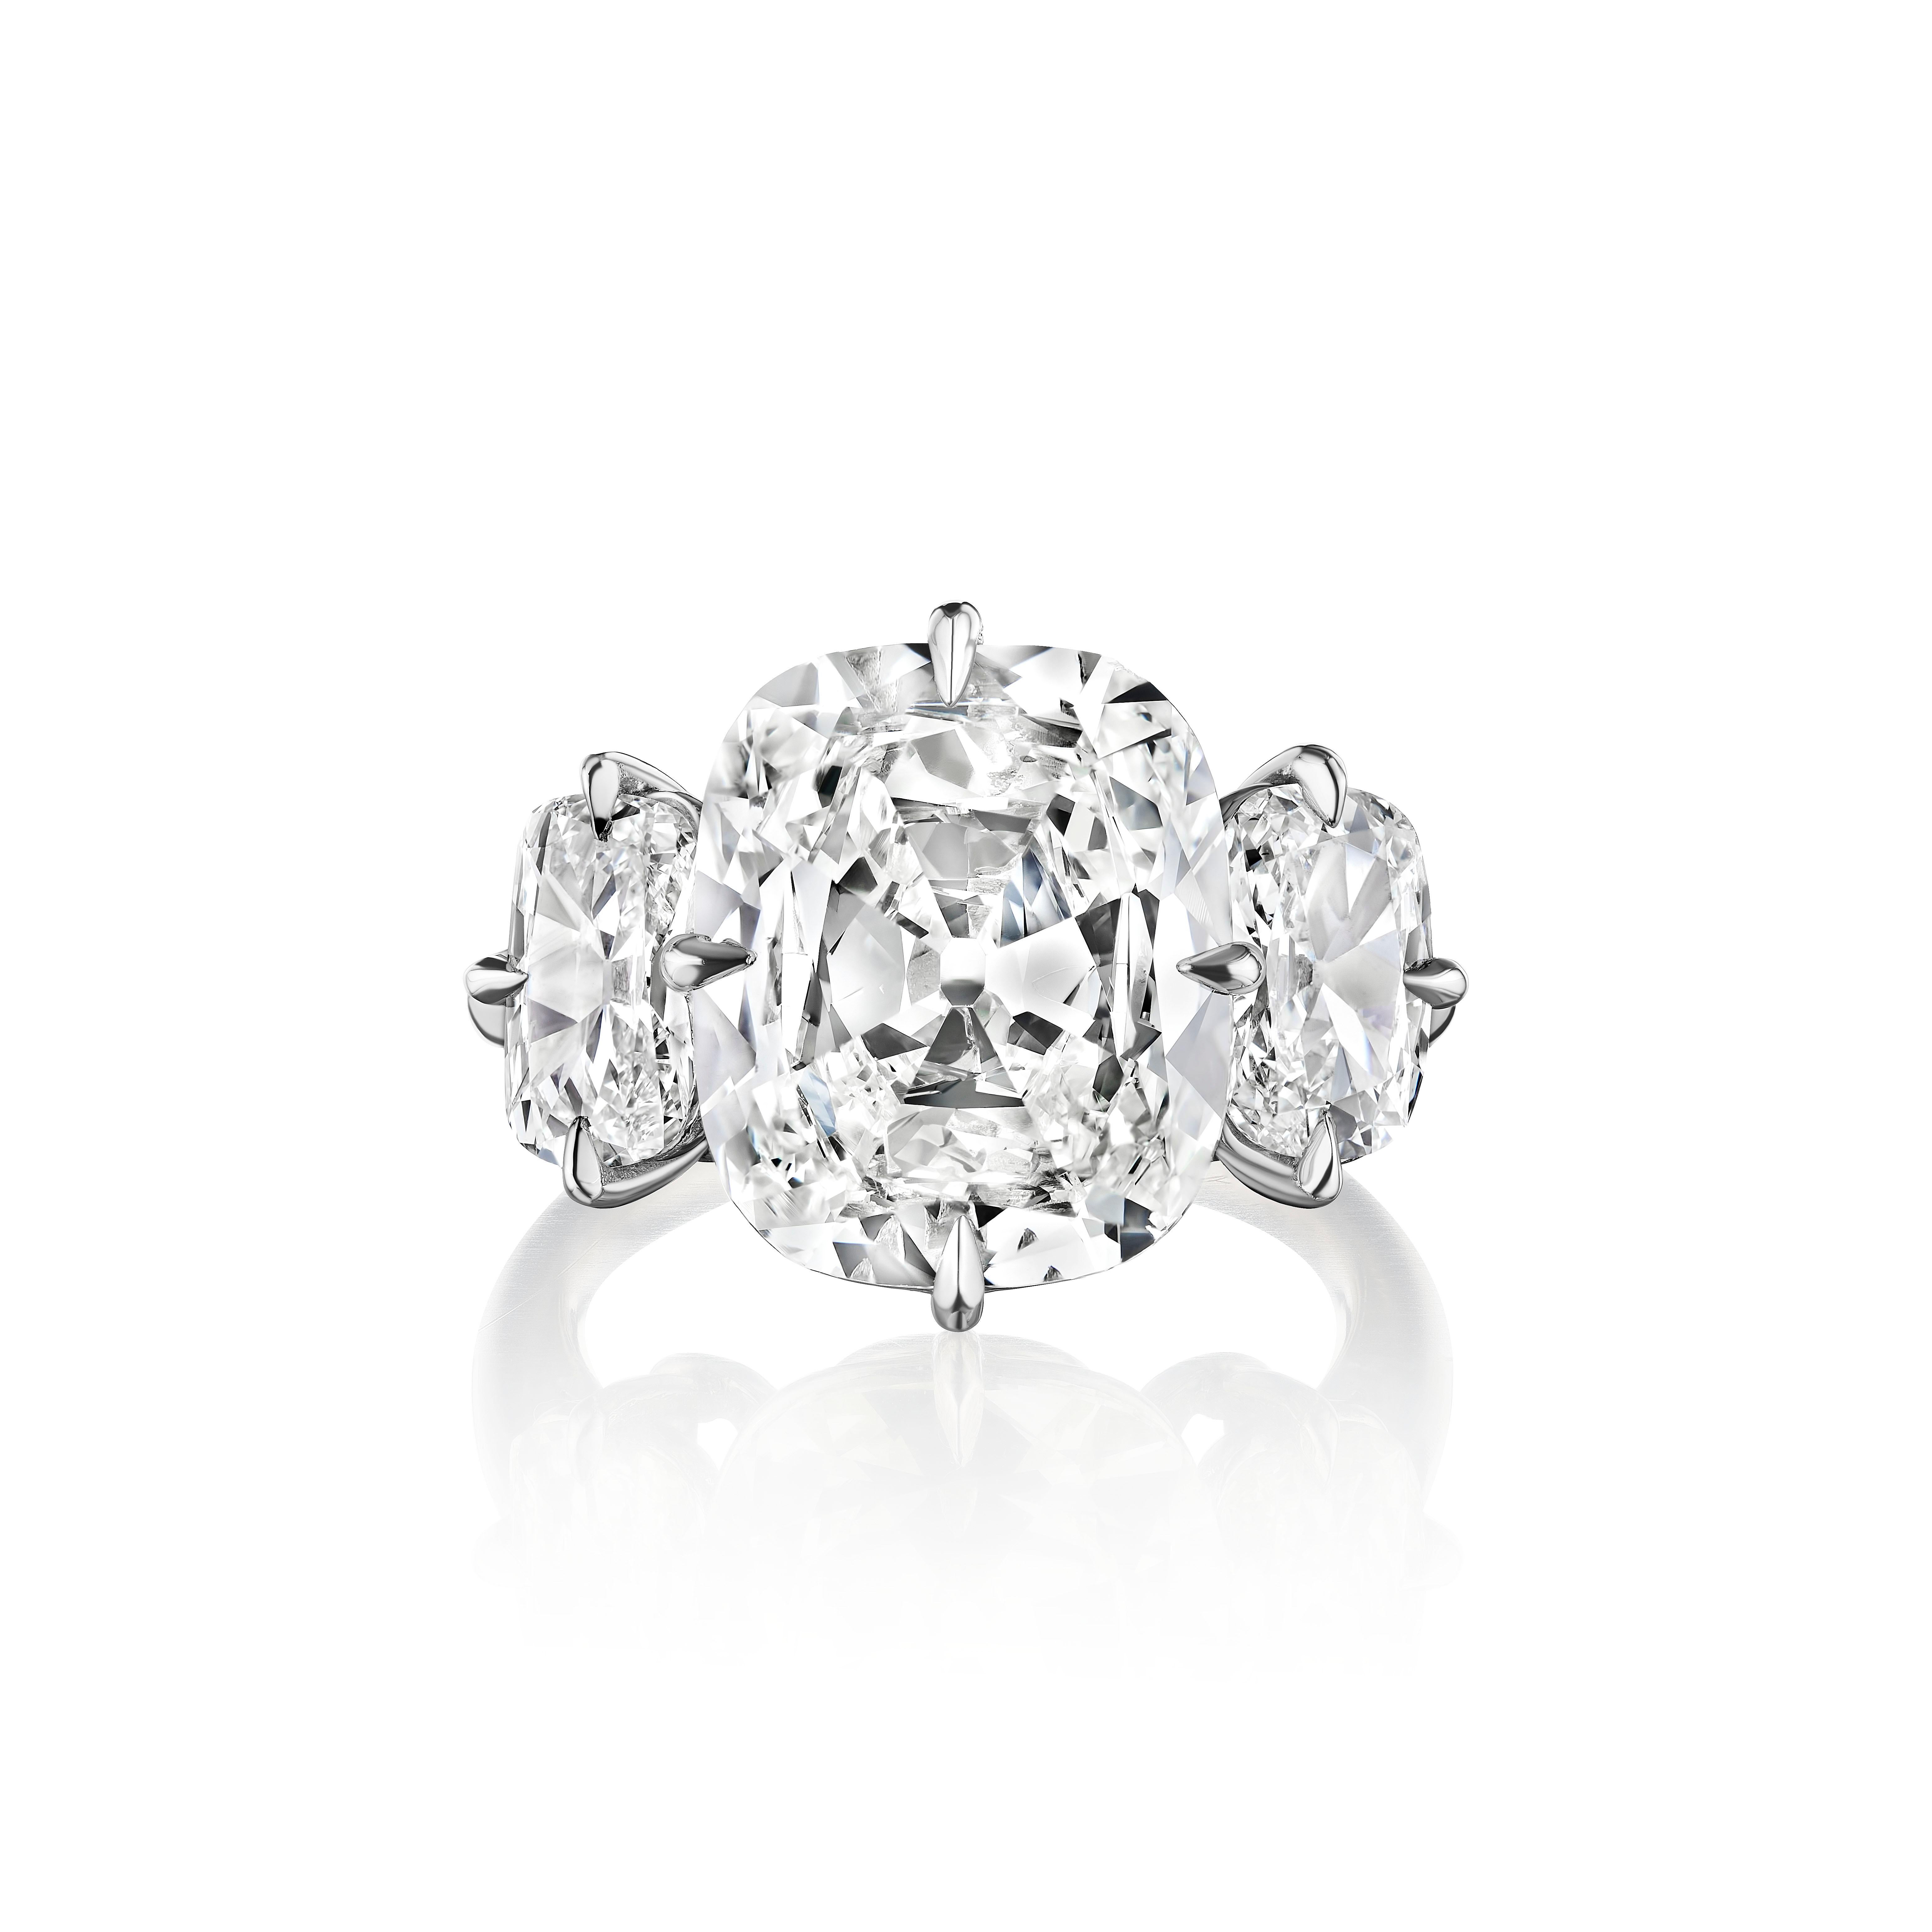 elongated cushion cut engagement rings natural diamond